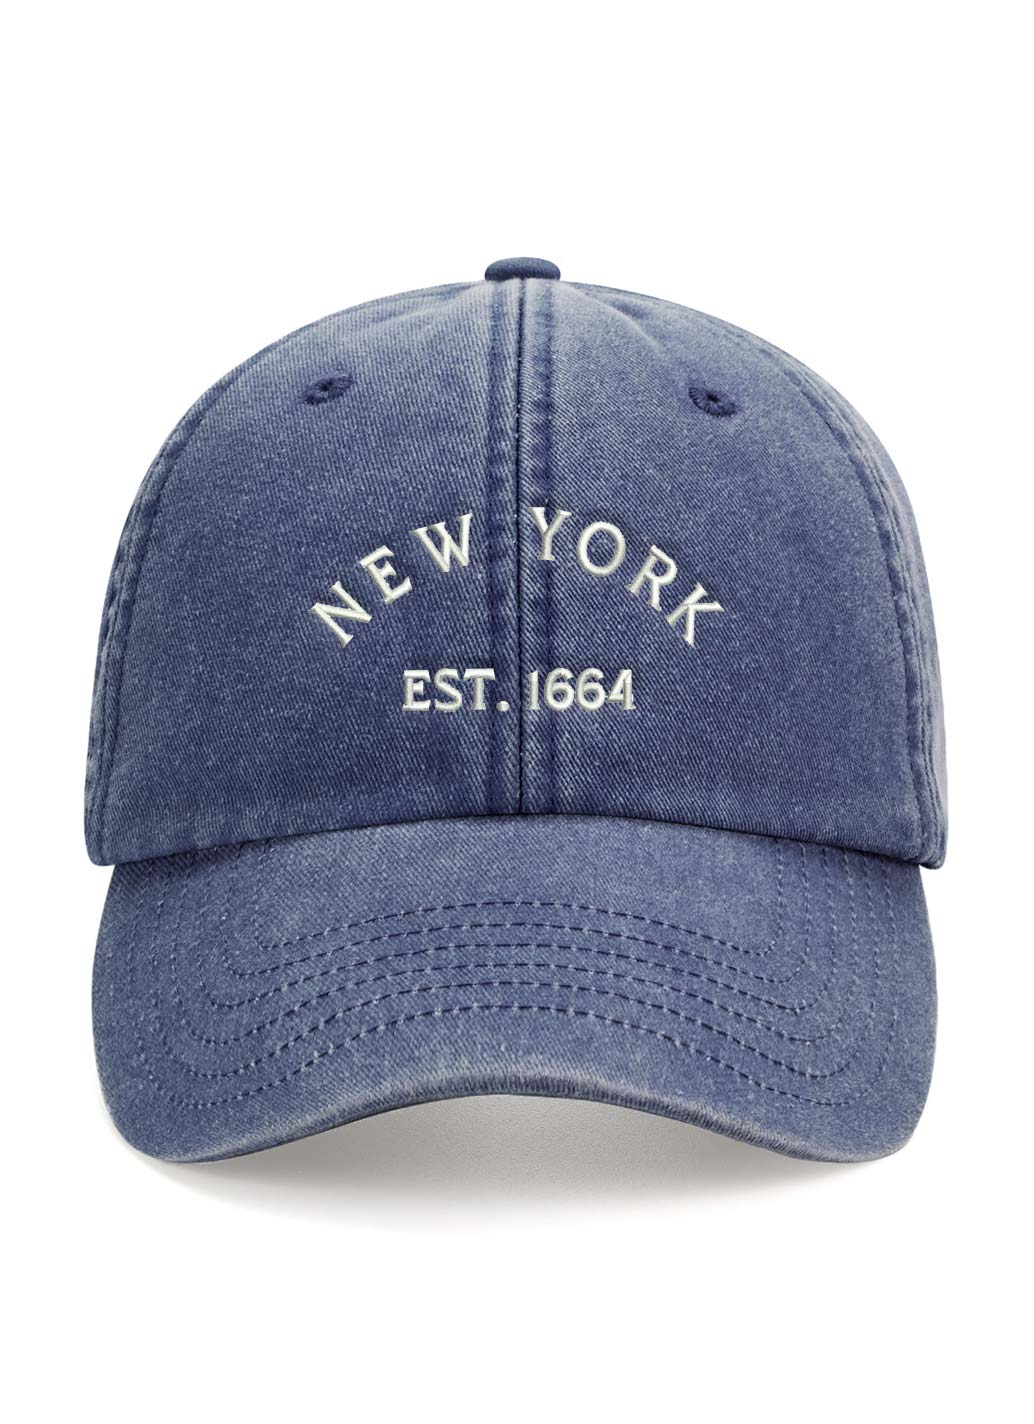 'NEW' VINTAGE NEW YORK CAP - DENIM BLUE